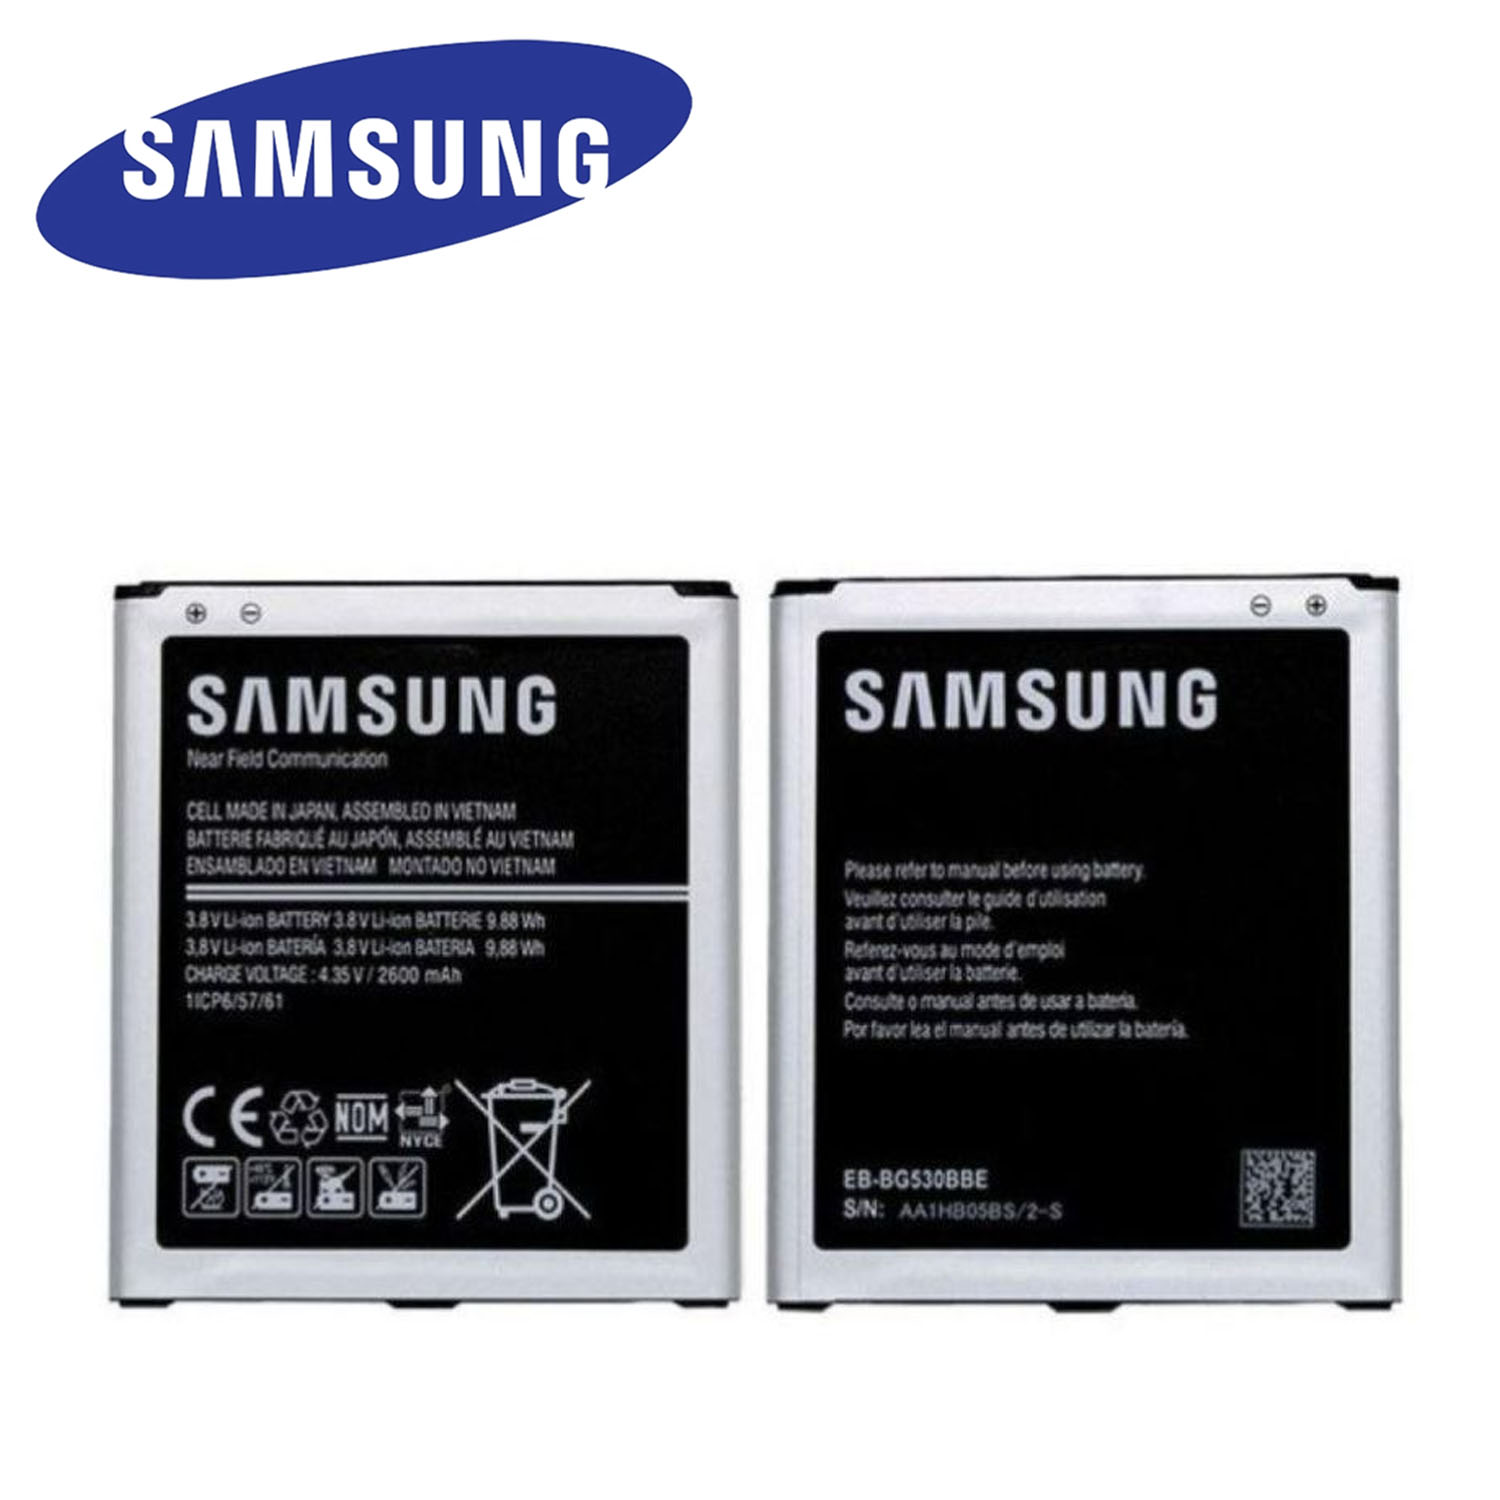 Samsung J2pro Battery Price Original Cheap Online Shopping